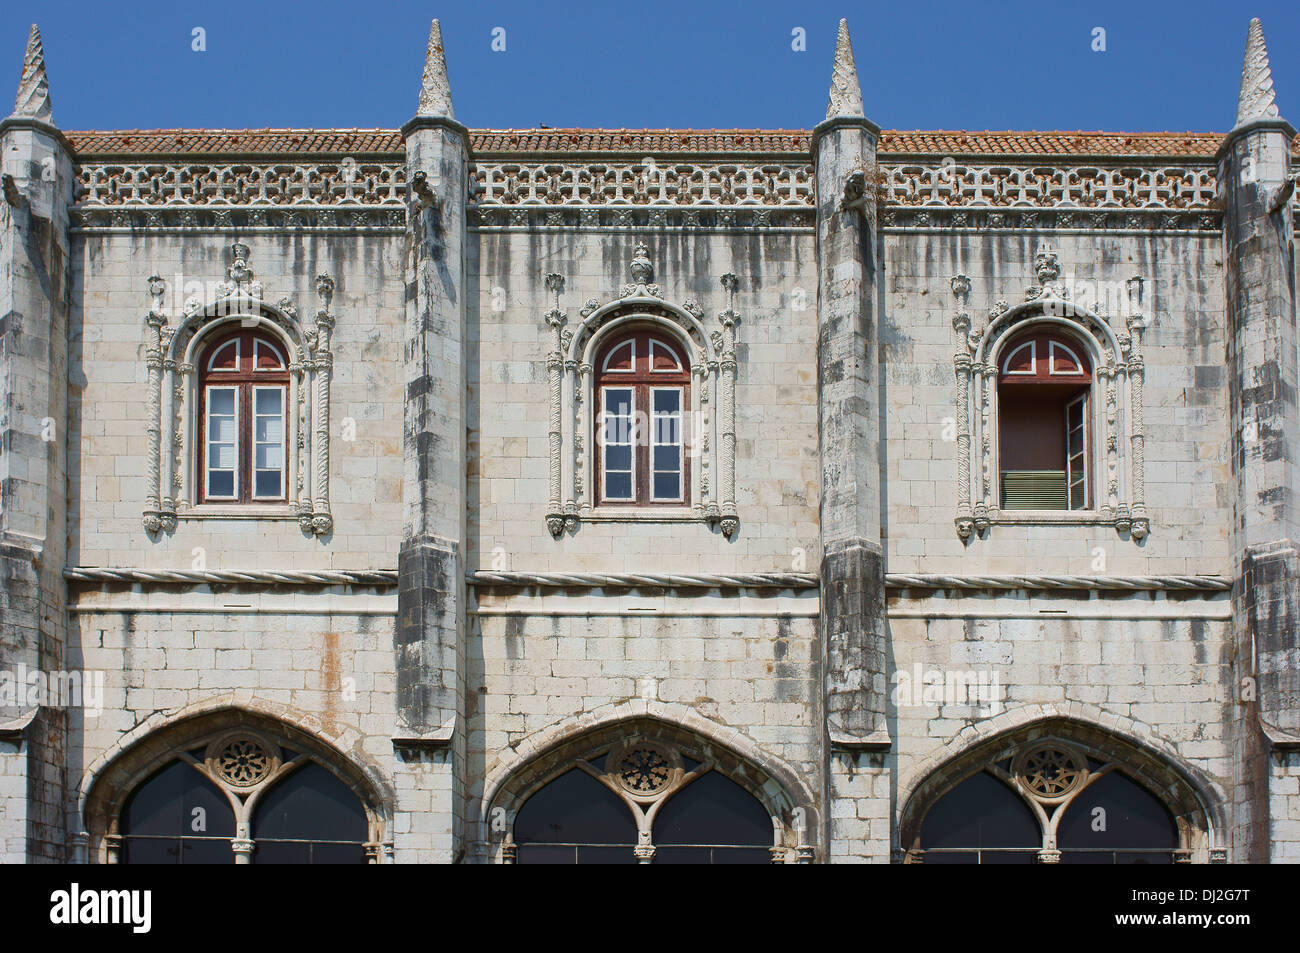 Mosteiro dos Jerónimos Lisboa Portugal estilo arquitectónico manuelino Foto de stock